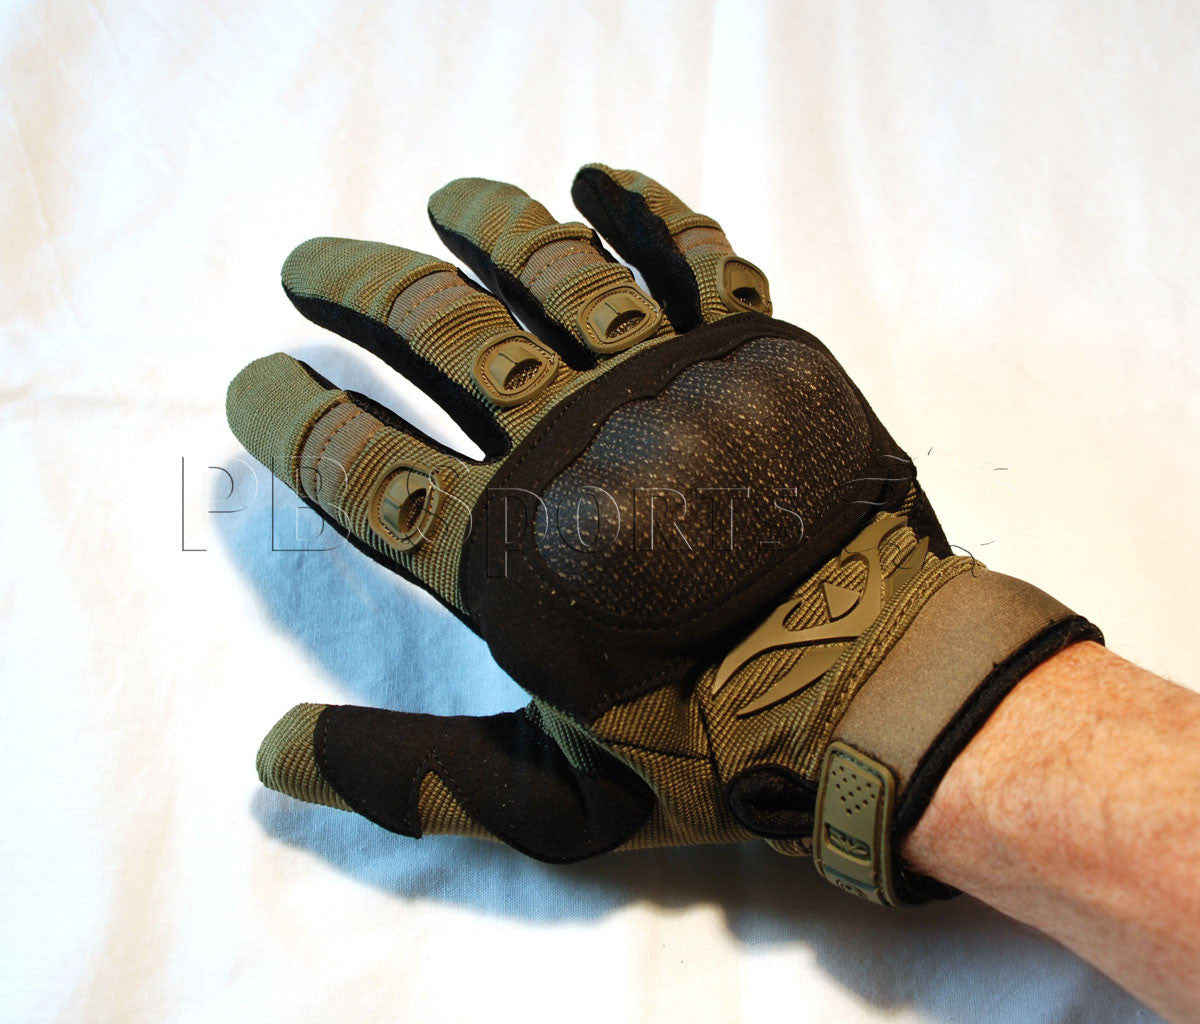 Valken Zulu Full Finger Gloves - Olive - XL - Valken Paintball